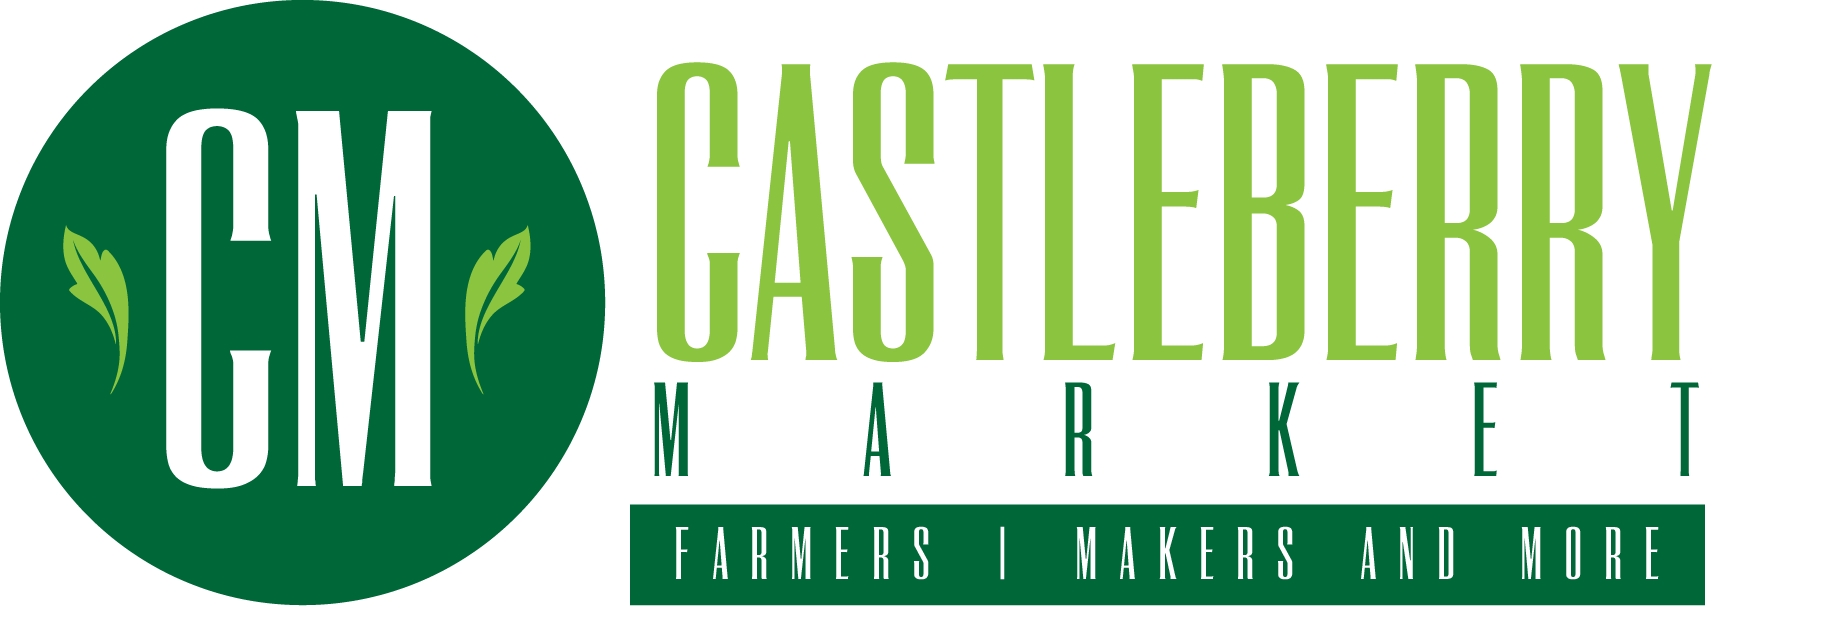 Castleberry Market cover image